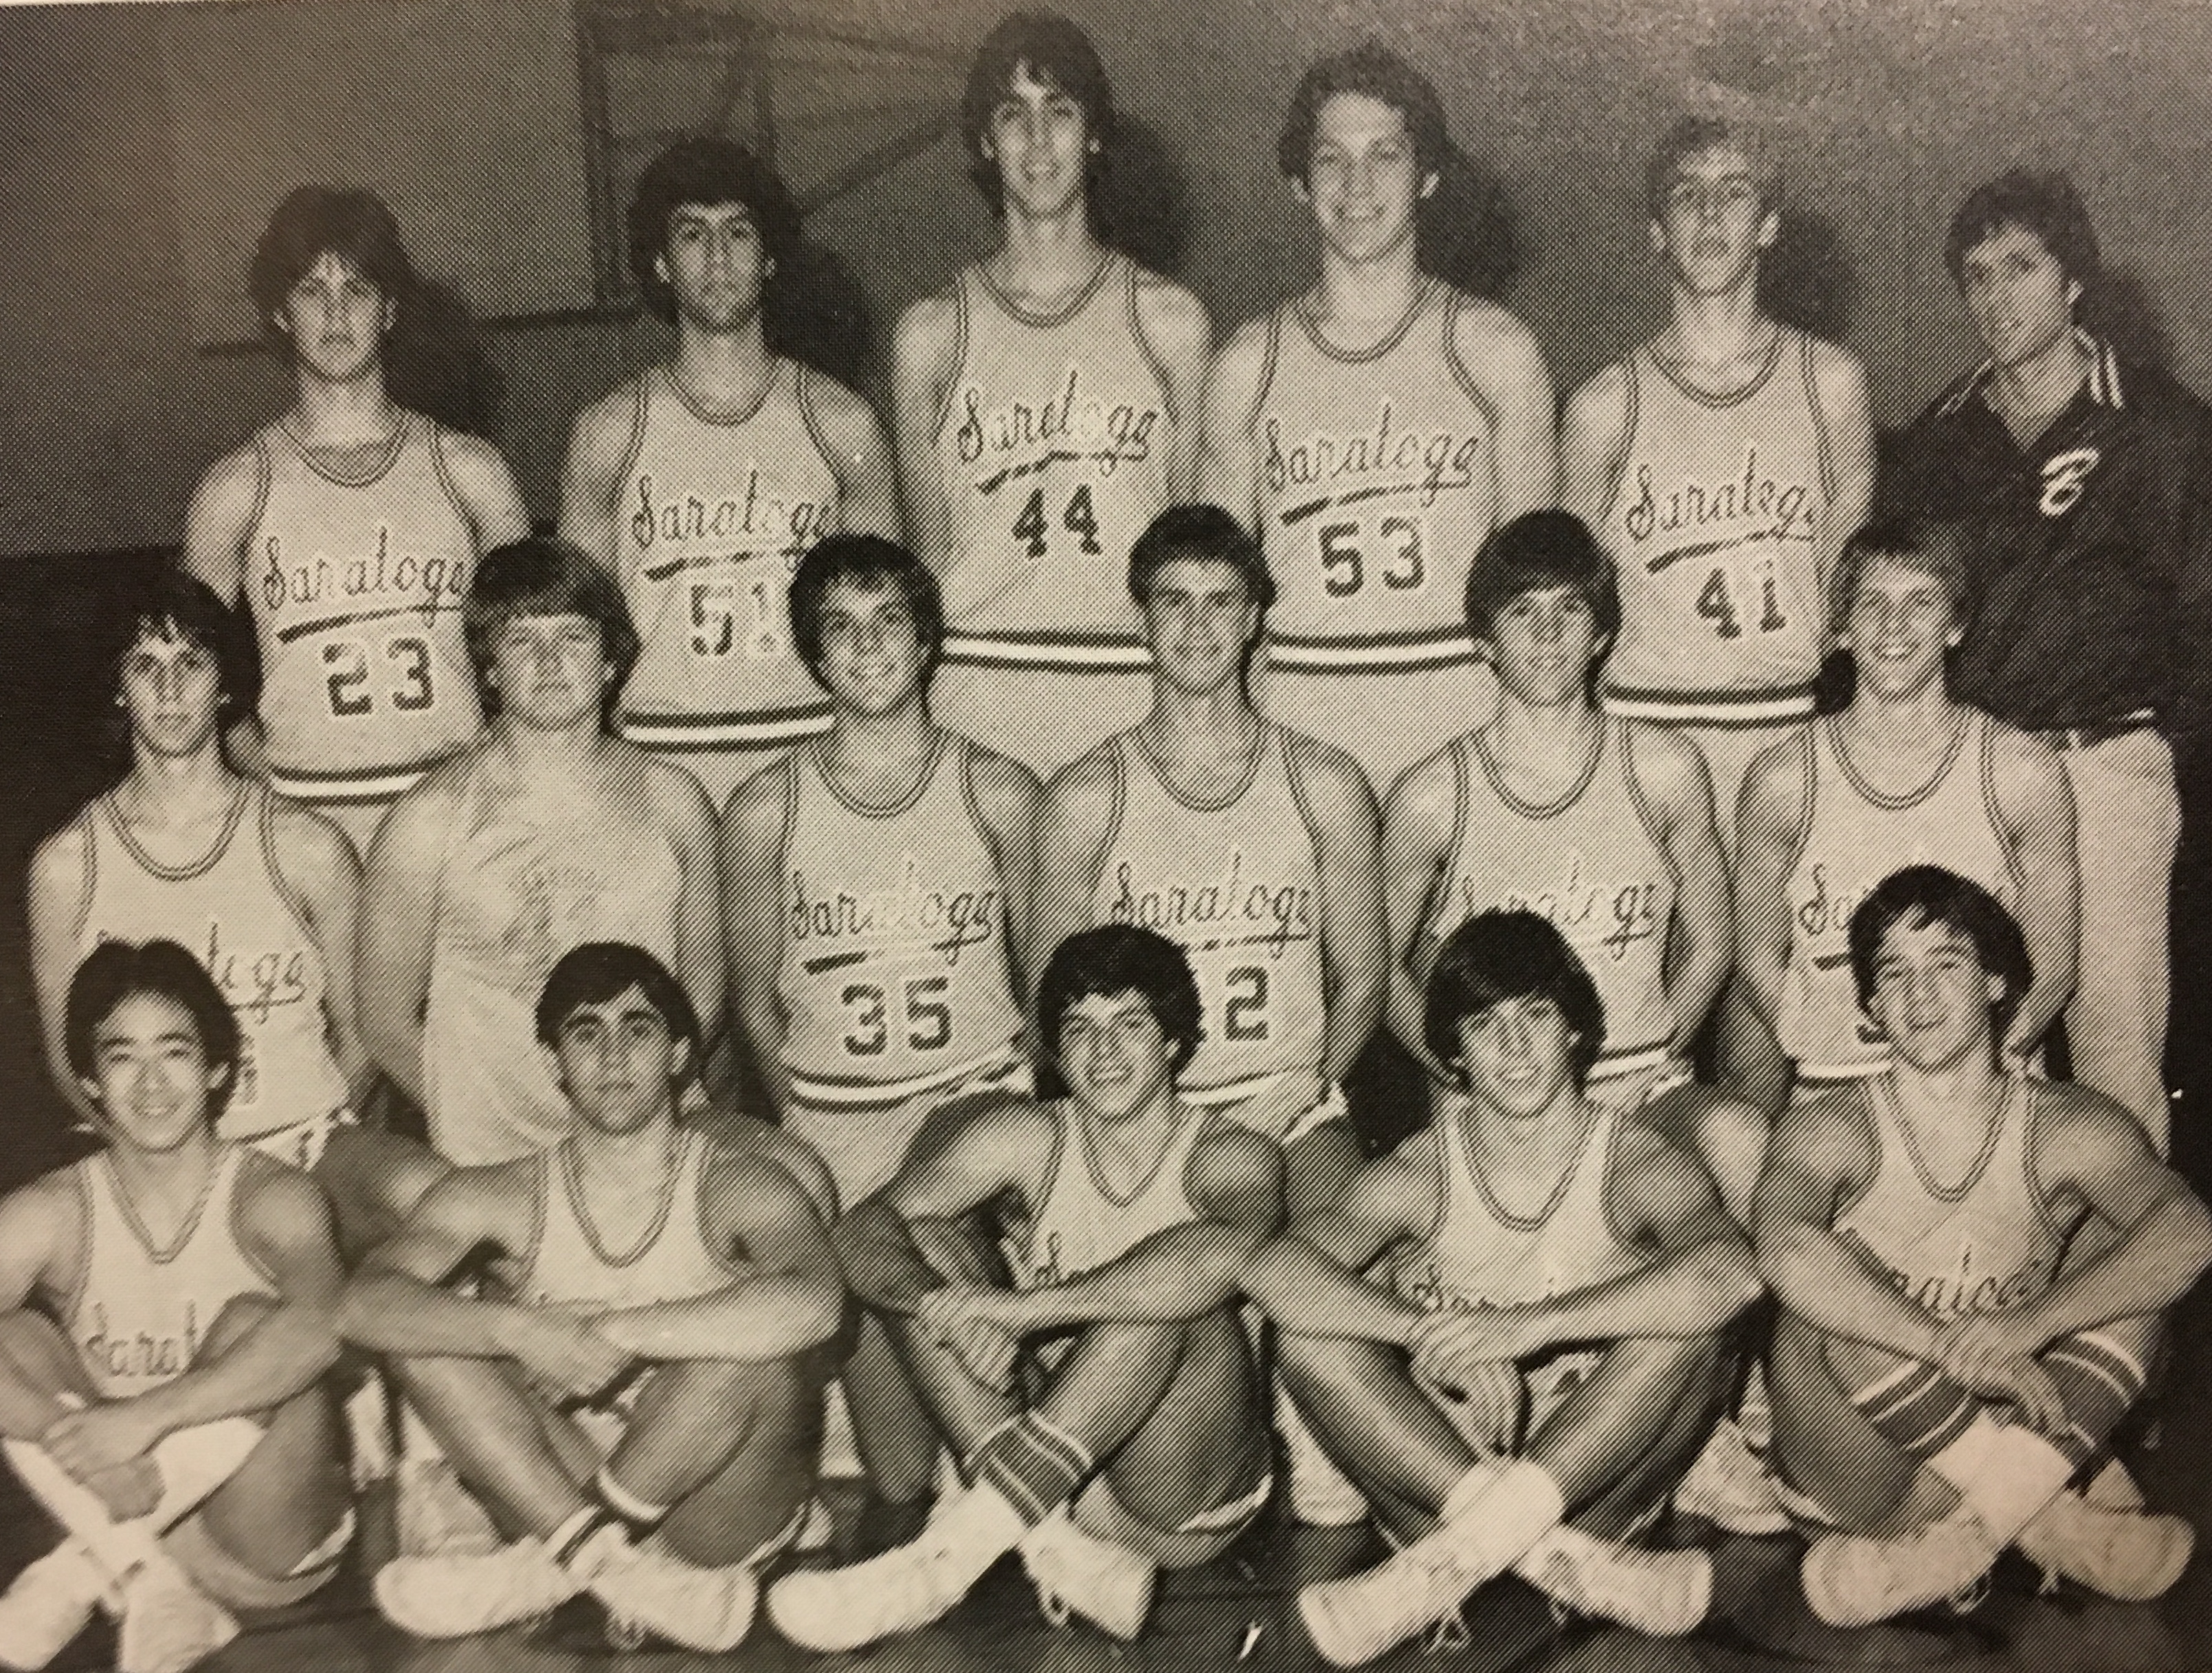 1983 team photo goes here